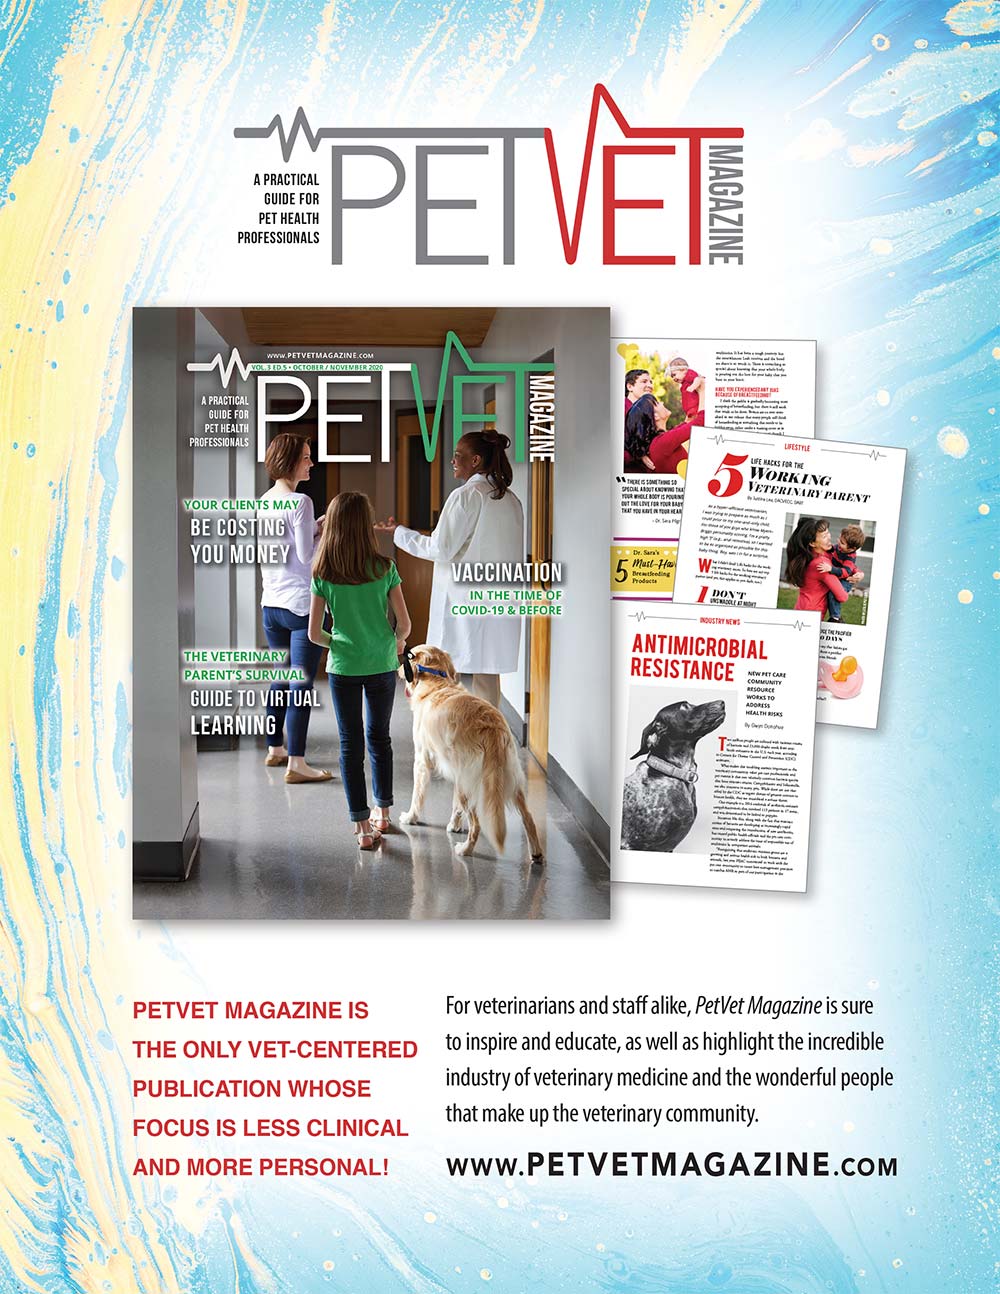 Pet Vet Magazine Advertisement 